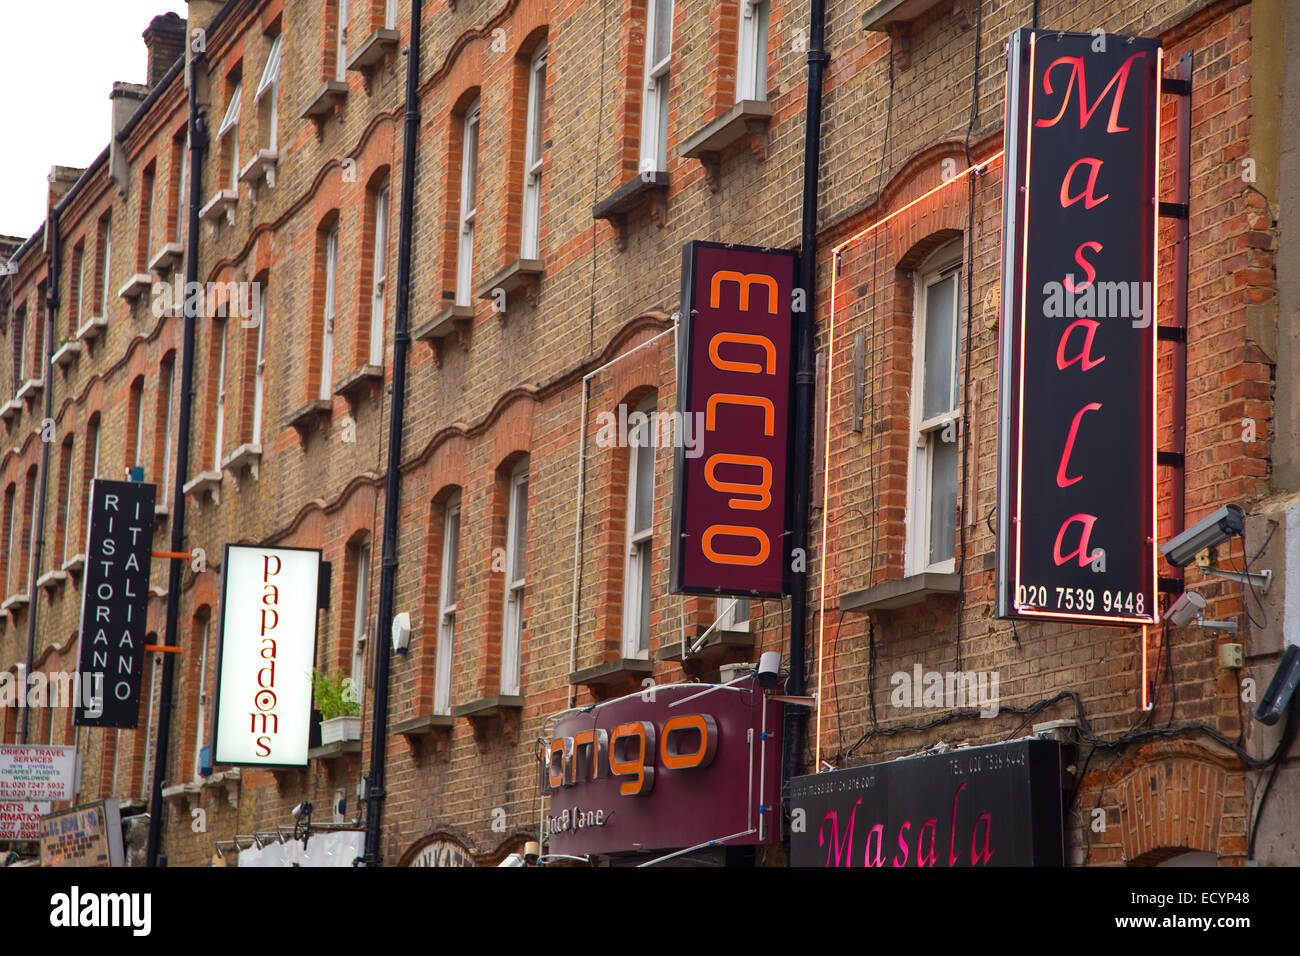 LONDON - OCTOBER 18TH: Restaurant signs on Brick lane on October 18th, 2014 in London, england, uk. Brick lane is a culinary att Stock Photo